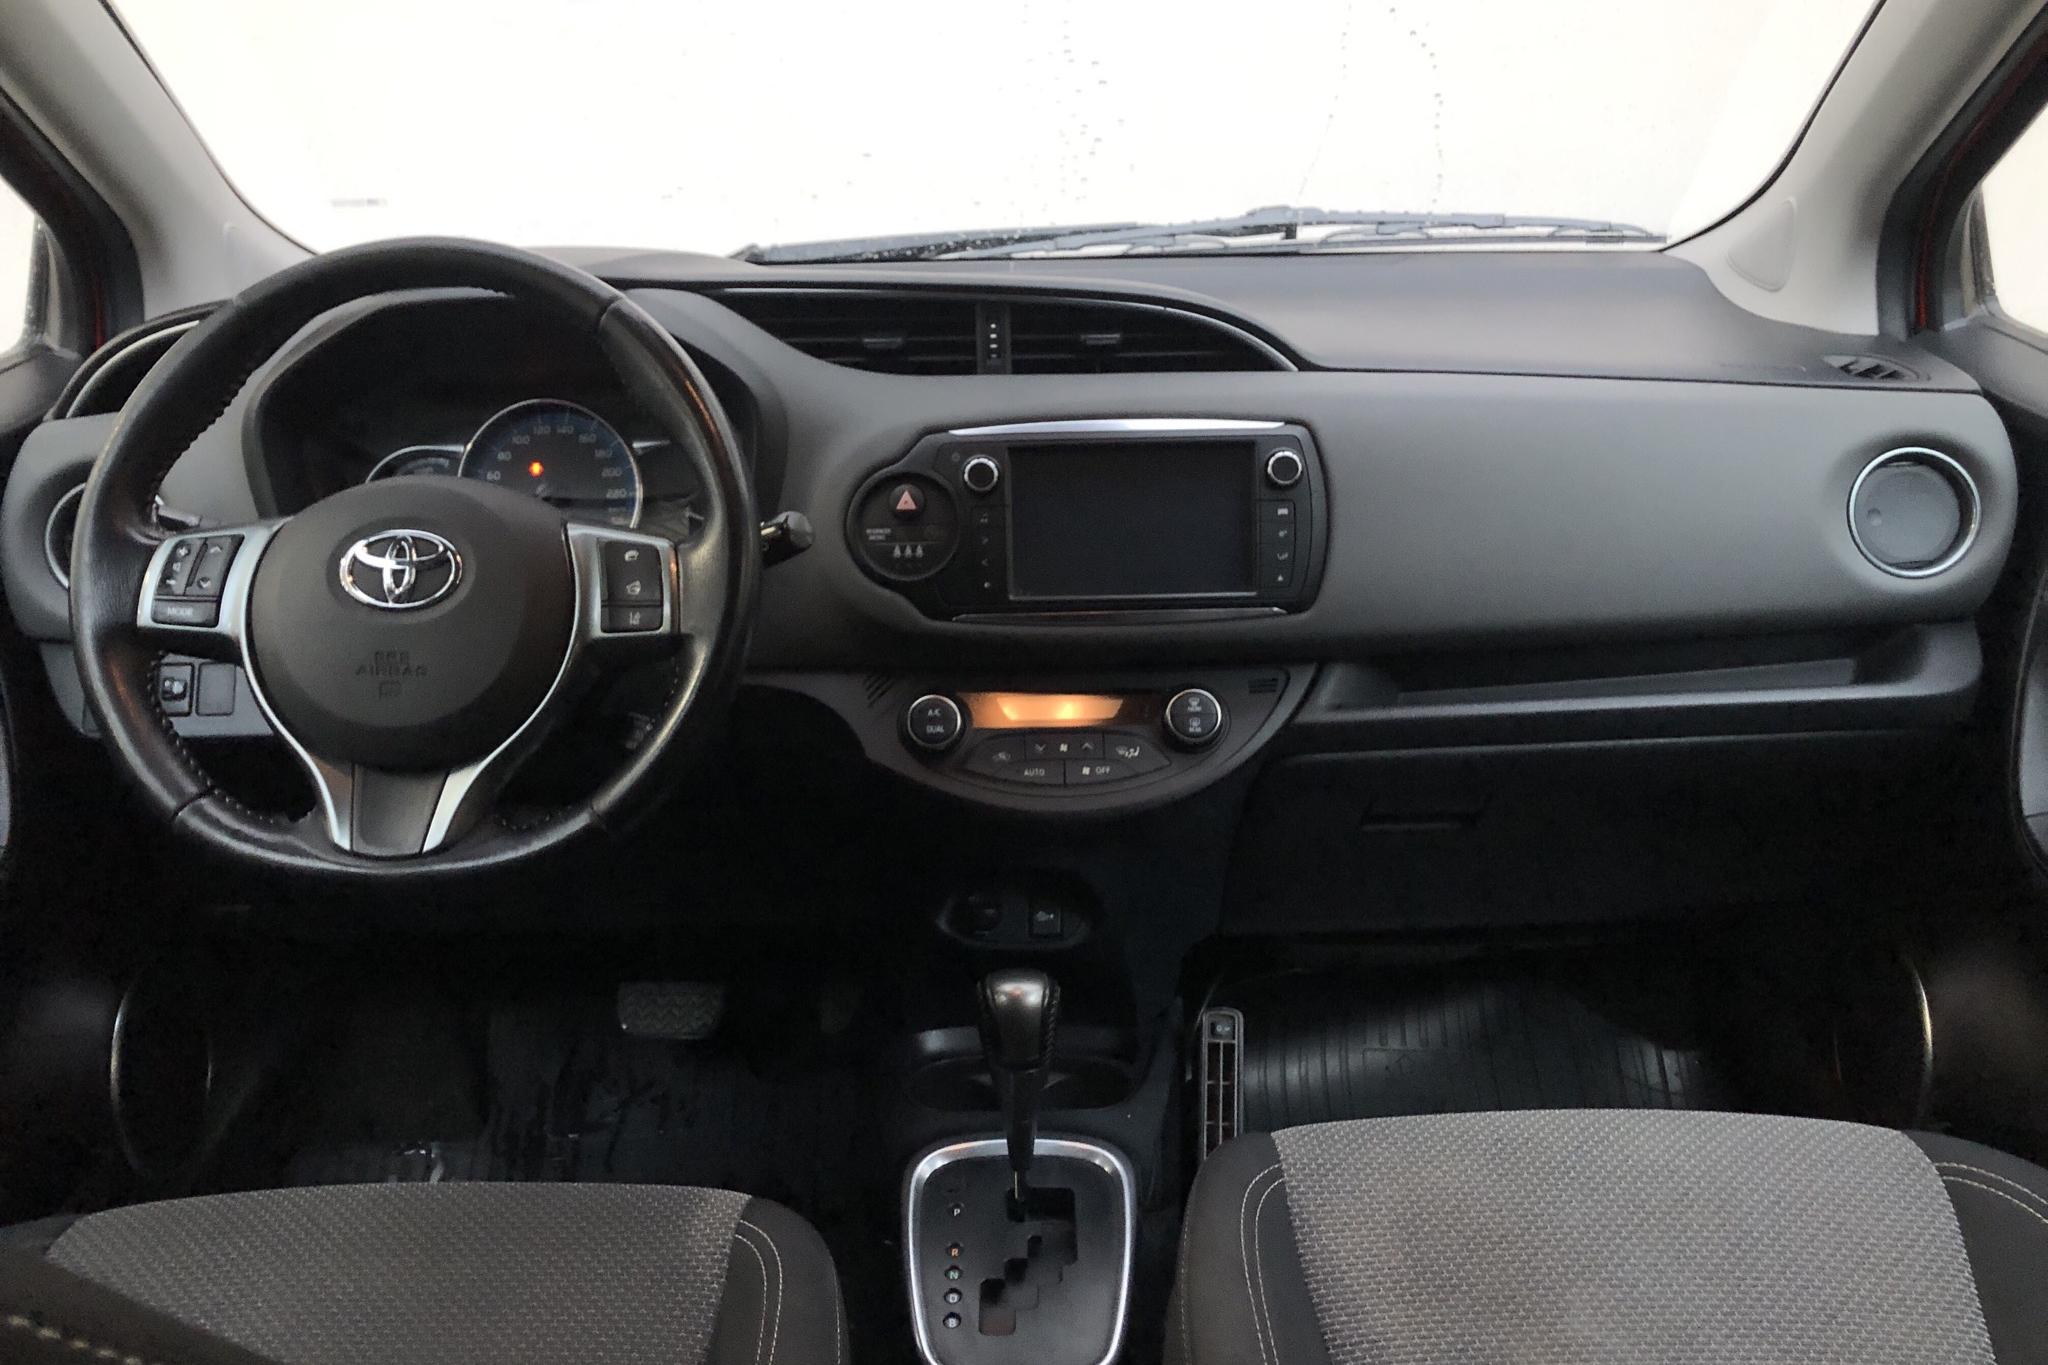 Toyota Yaris 1.5 HSD 5dr (75hk) - 9 885 mil - Automat - röd - 2016